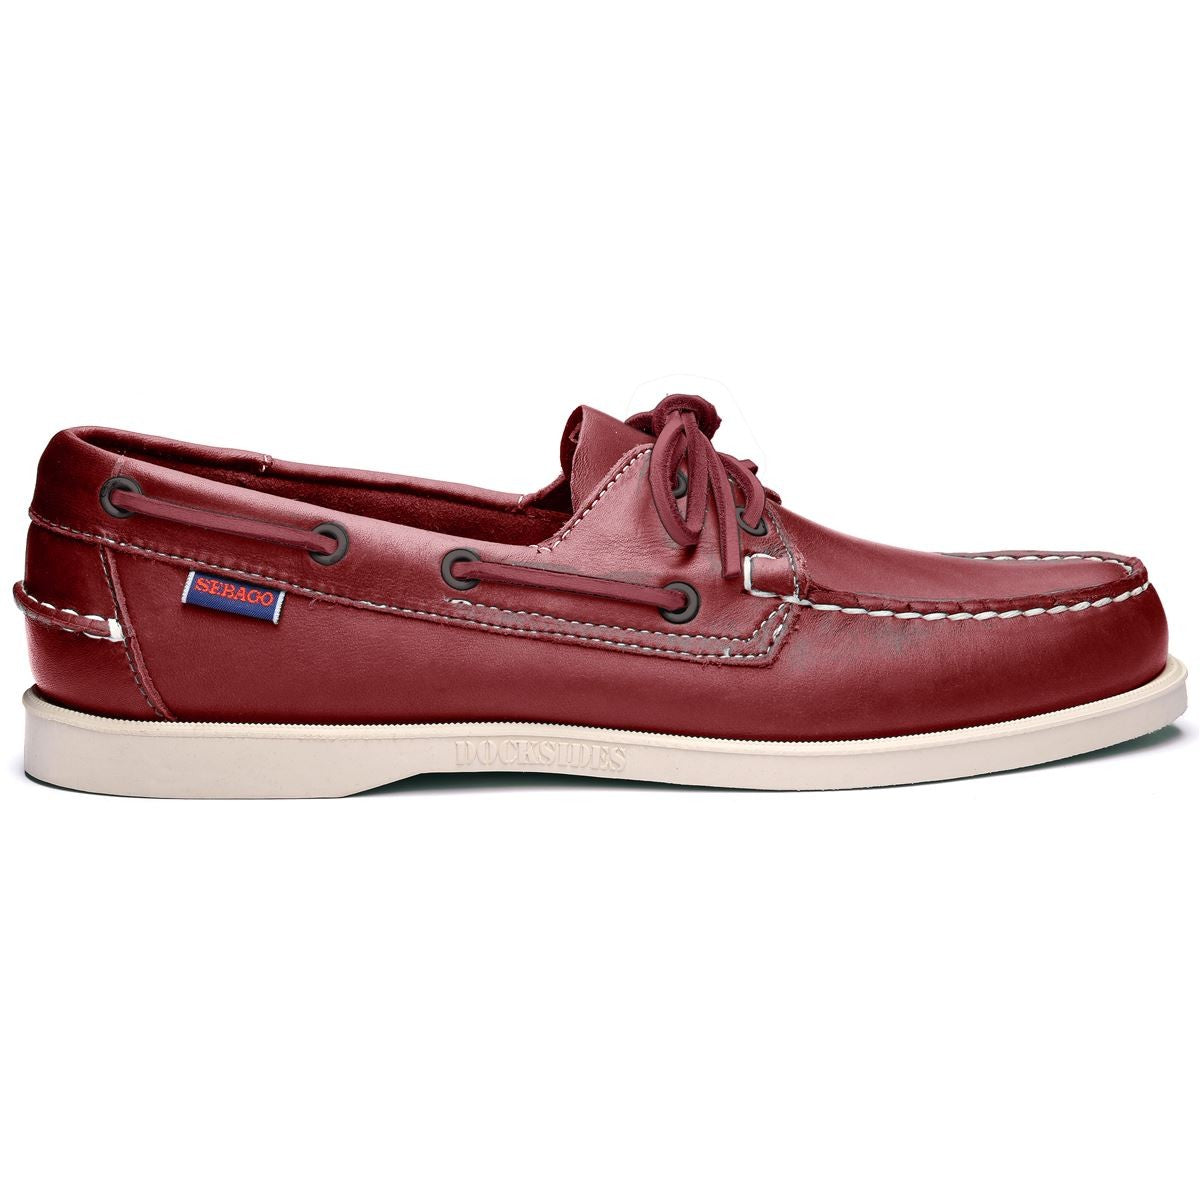 Bateau/Docksides Rouge 993 cuir lisse - Chaussures Pirotais 